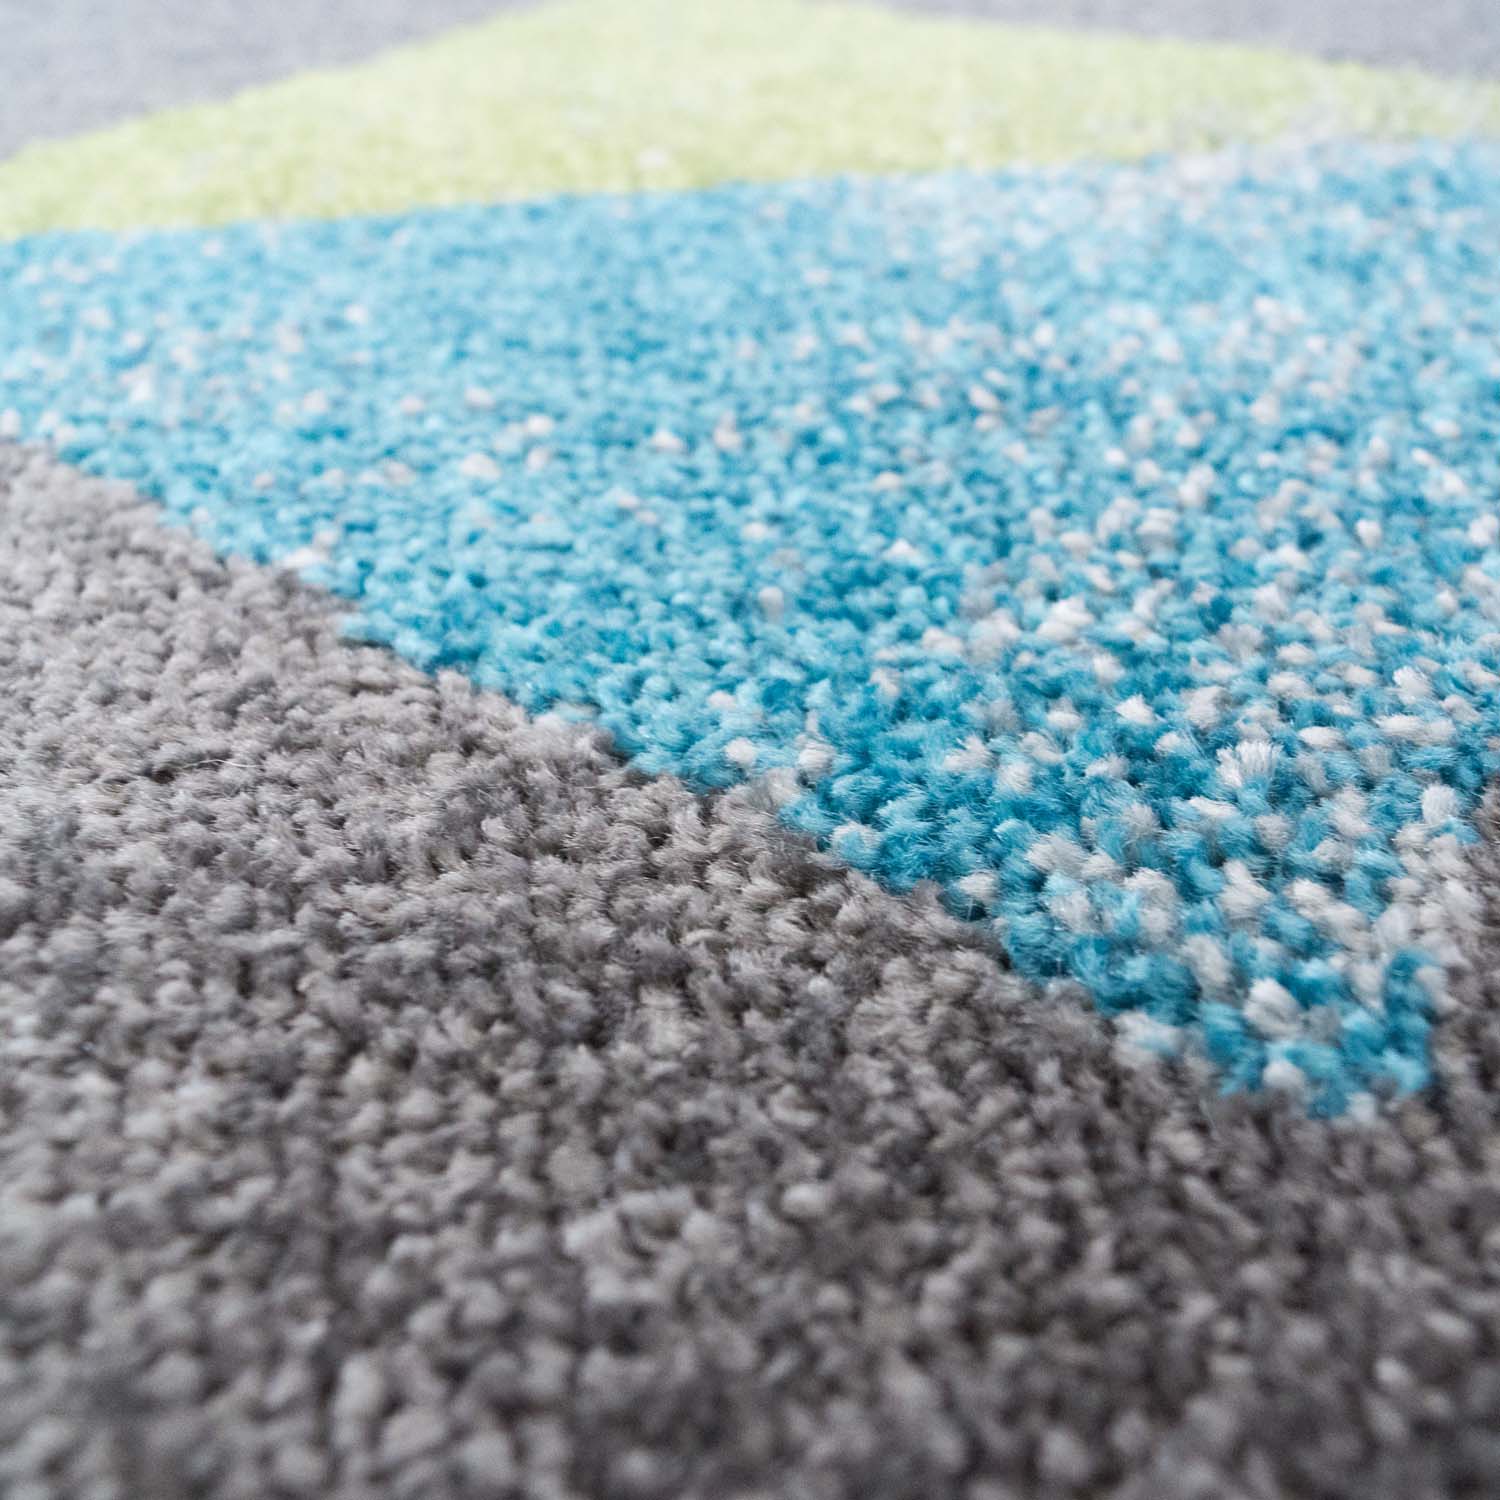 Kindertapijt Omid Diamond Groen/Blauw Vloerkleed - Omid Carpets